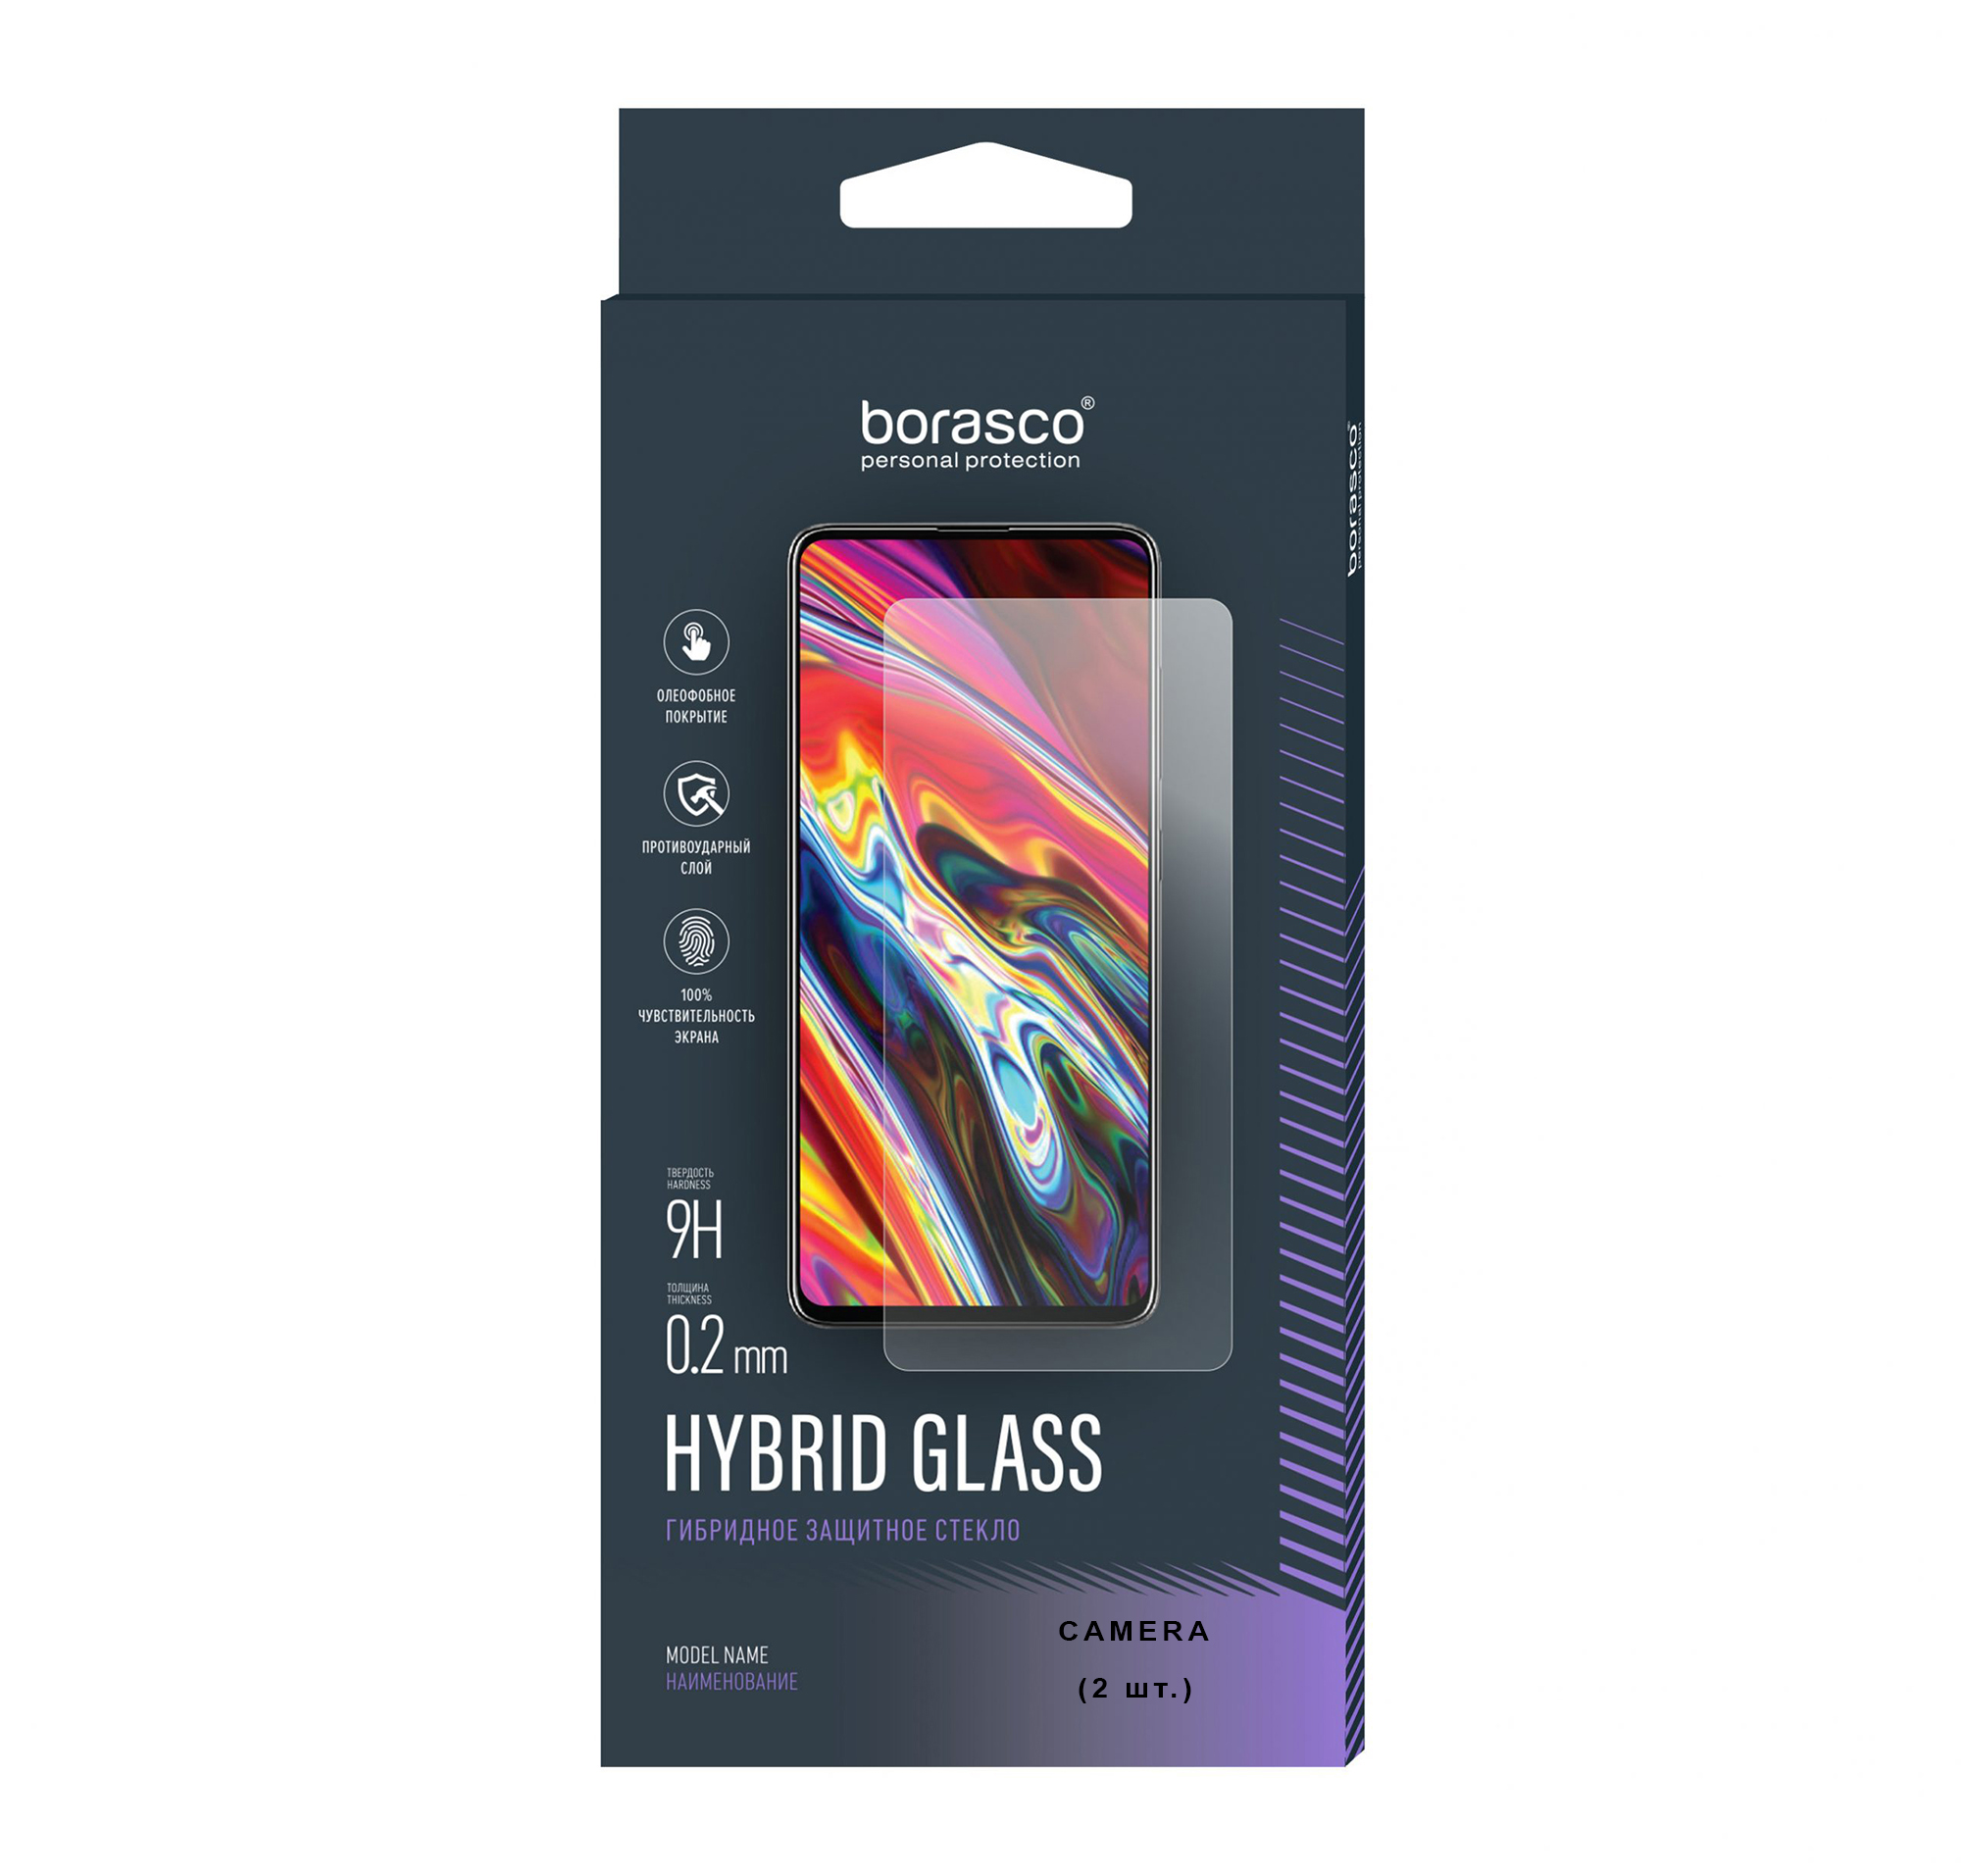 Защитное стекло (Экран+Камера) Hybrid Glass для Xiaomi Mi 10T/ Mi 10T Pro защитное стекло borasco 0 26 mm для xiaomi mi 10t mi 10t pro